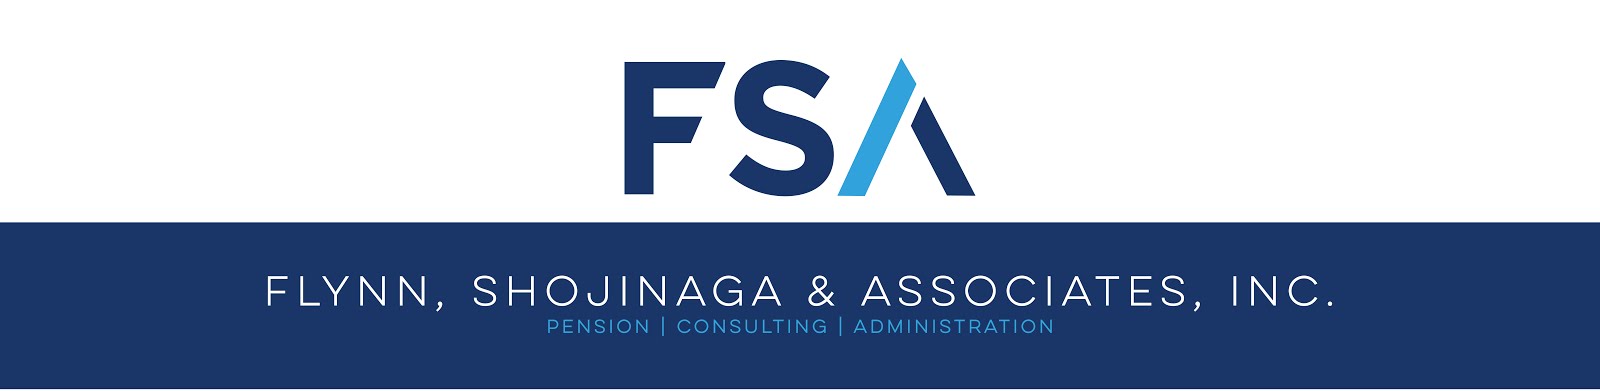 Flynn, Shojinaga & Associates, Inc.